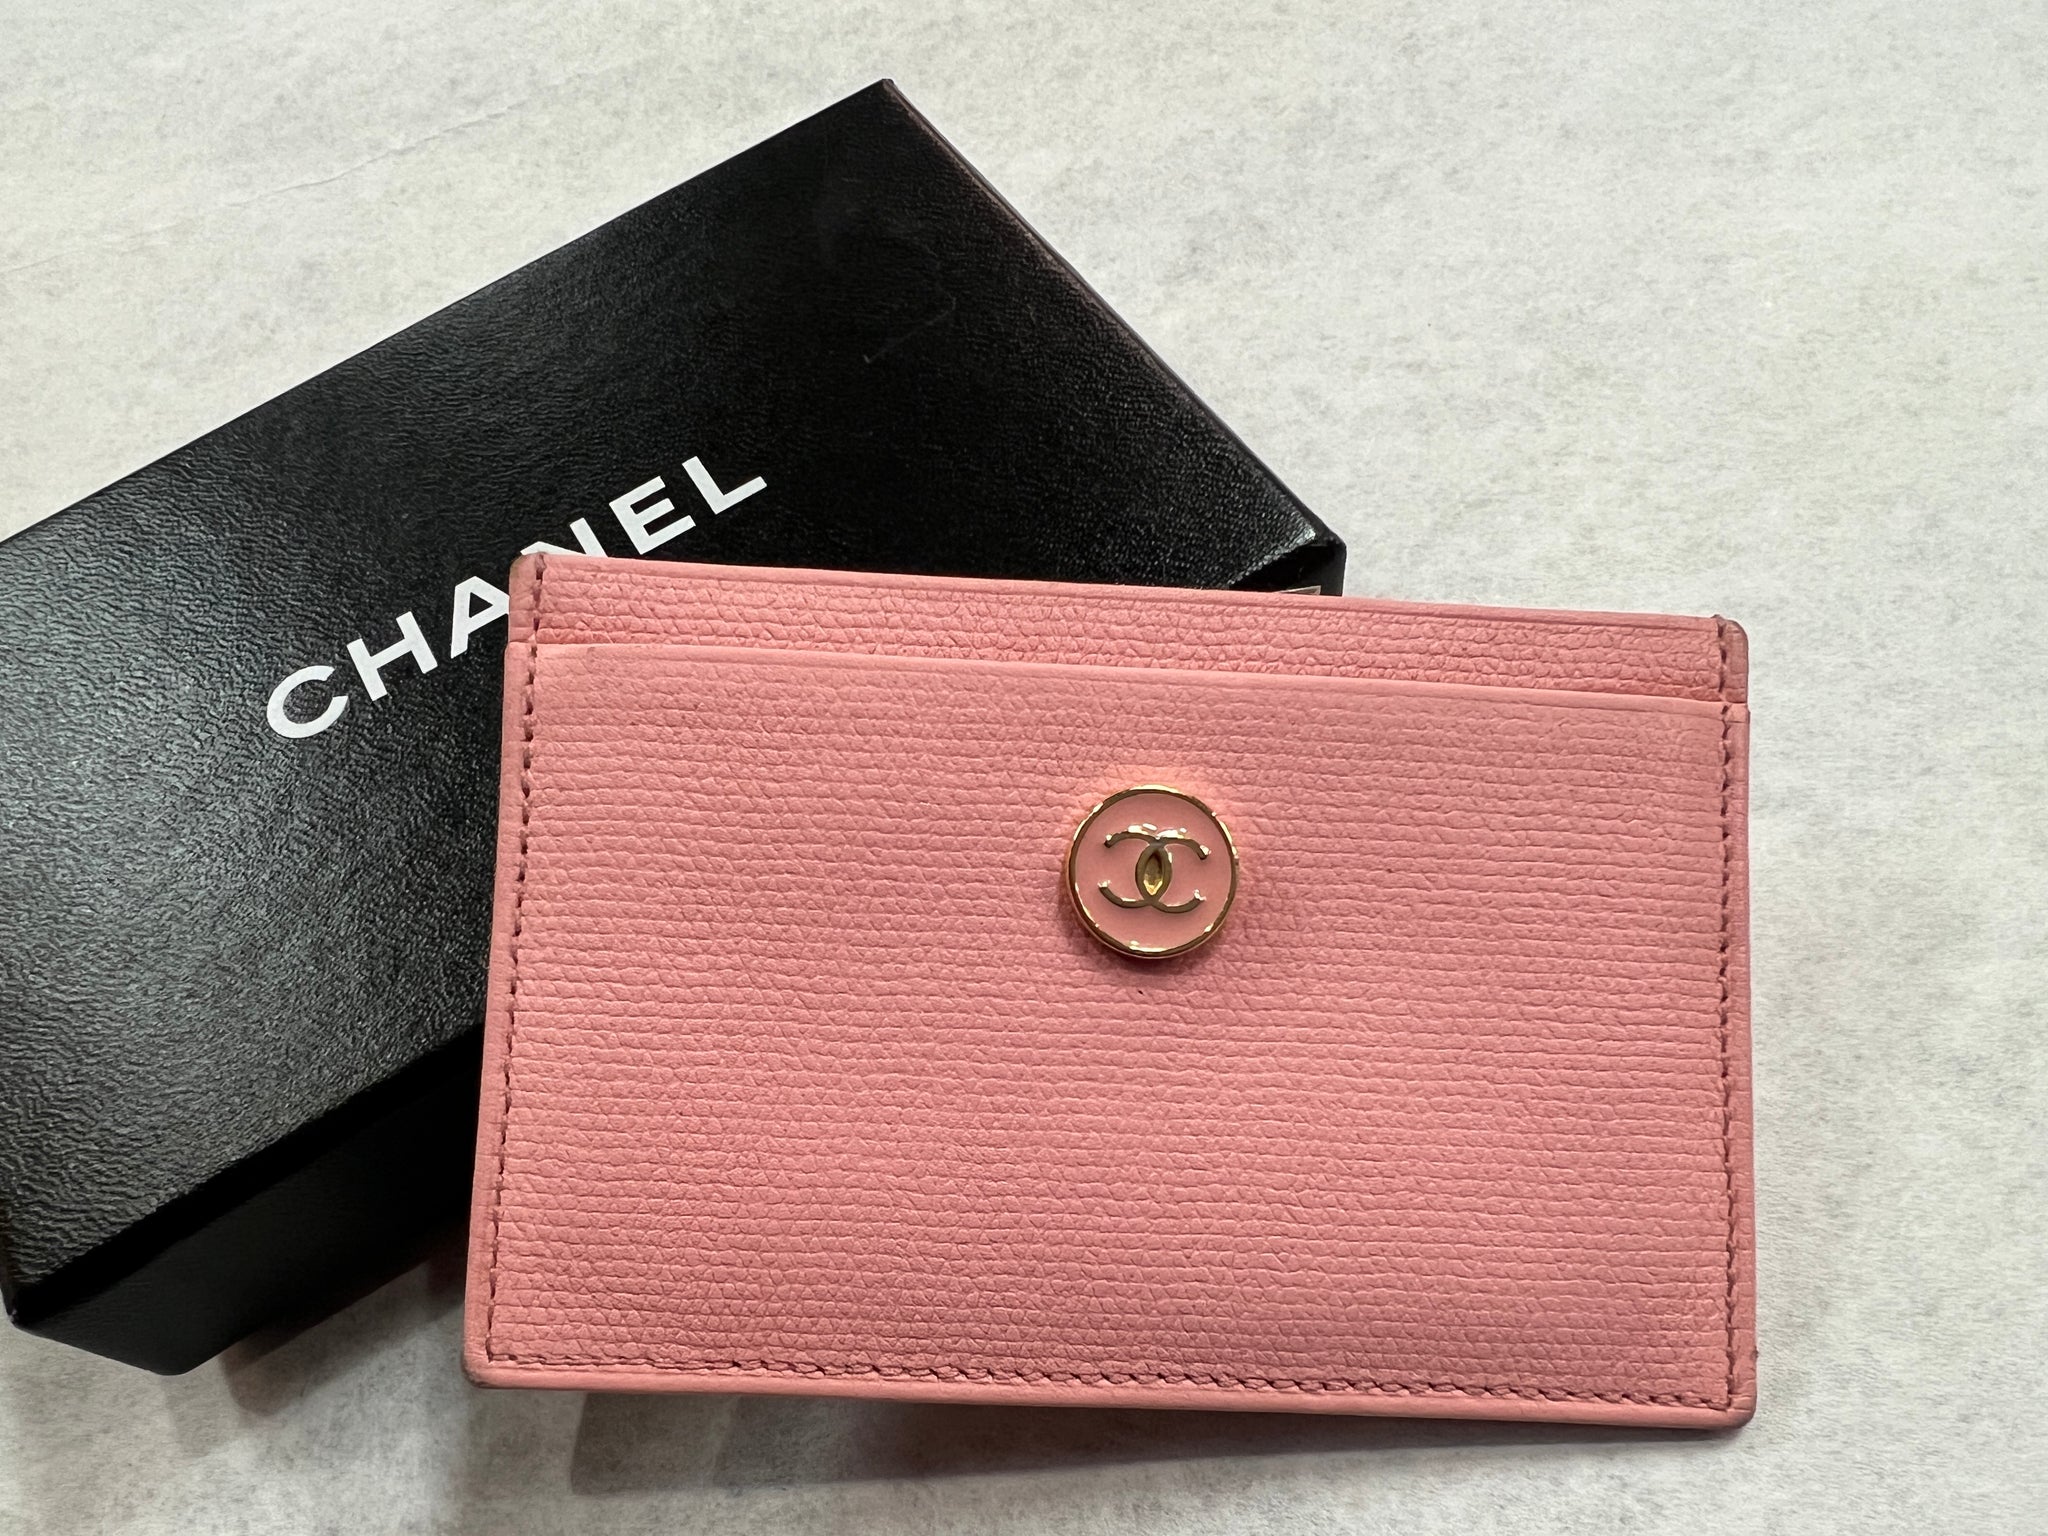 Chanel Boy Chanel Womens Card Holders